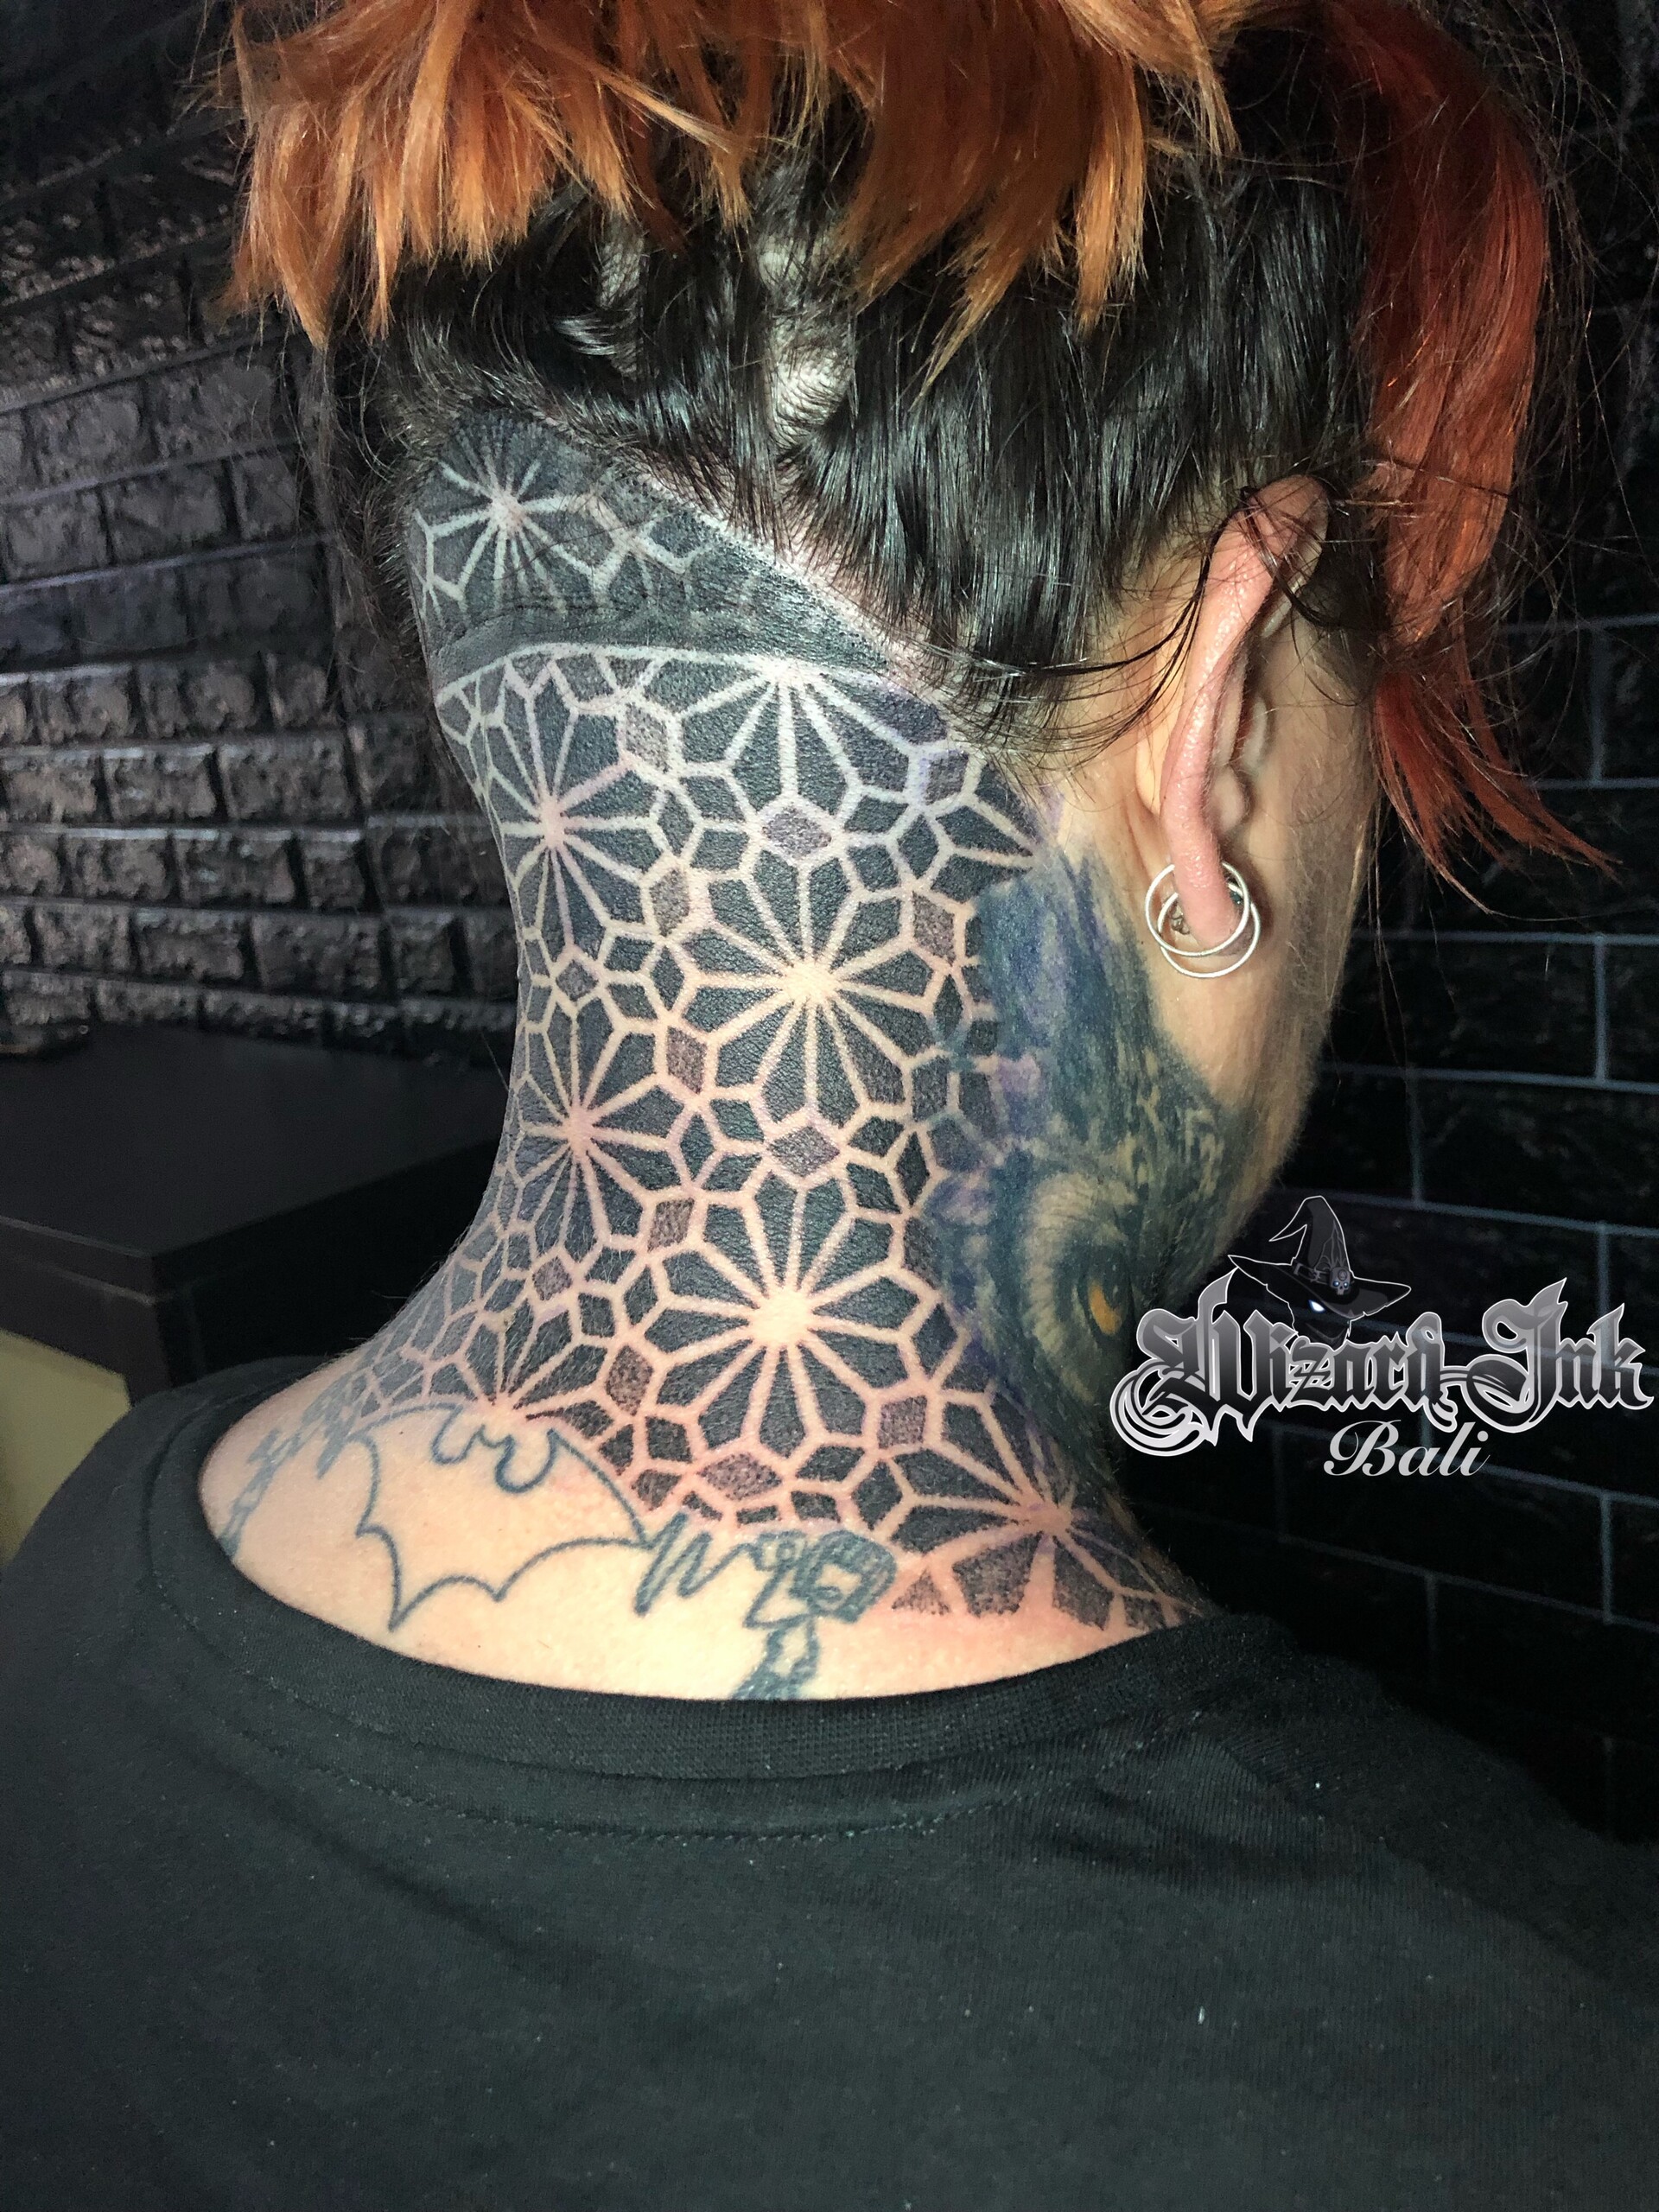 ArtStation - Black work geometric tattoos Neck